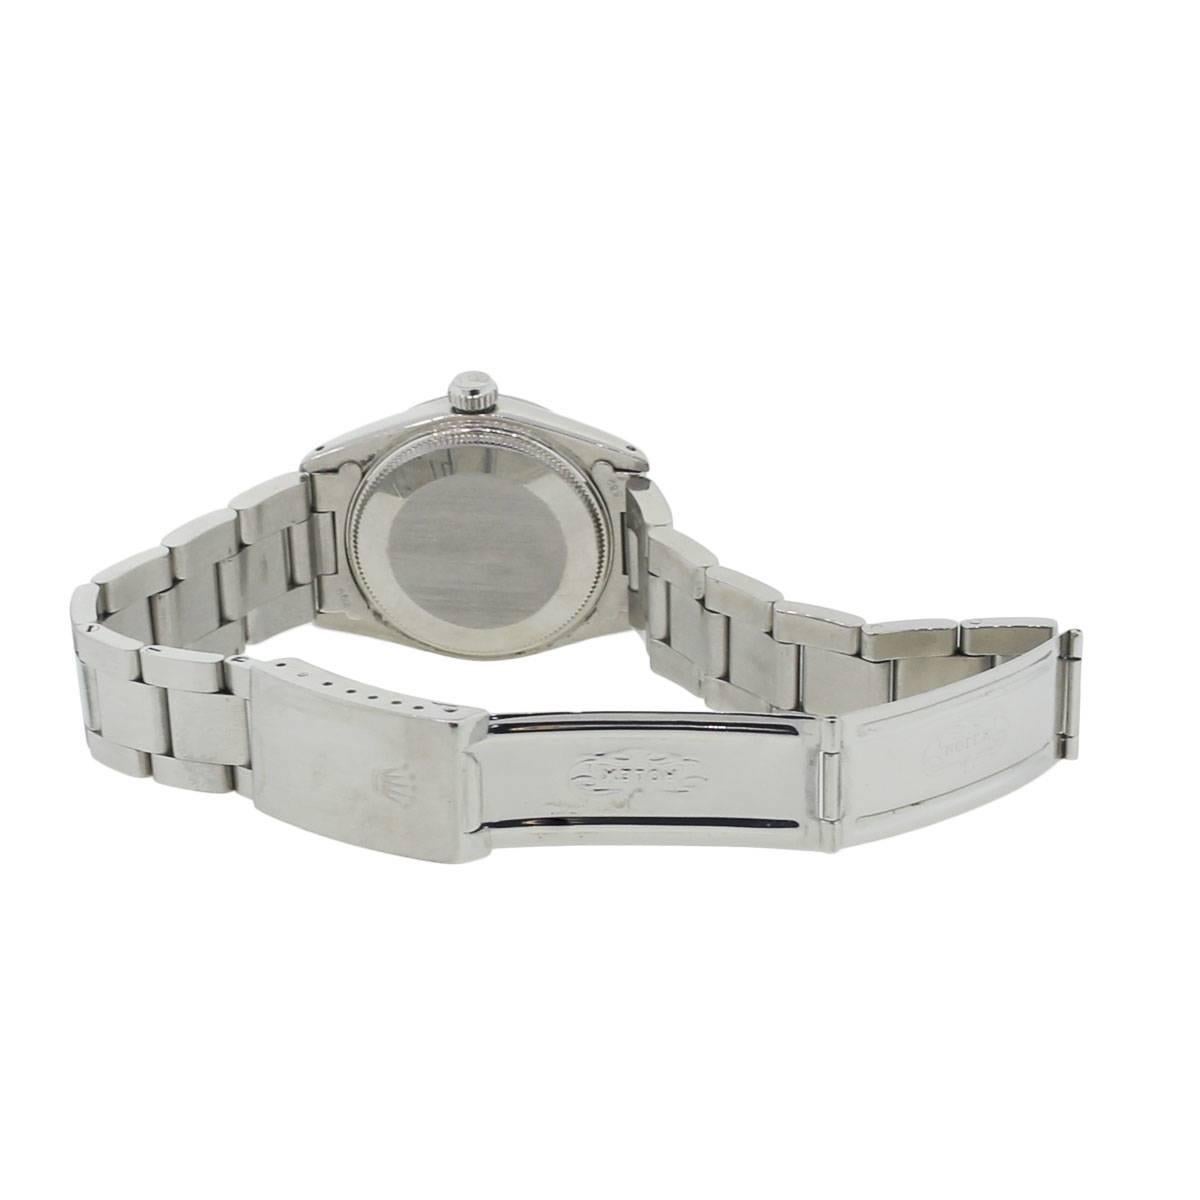 Women's Rolex Stainless steel Datejust Midsize Automatic Wristwatch Ref 6824 